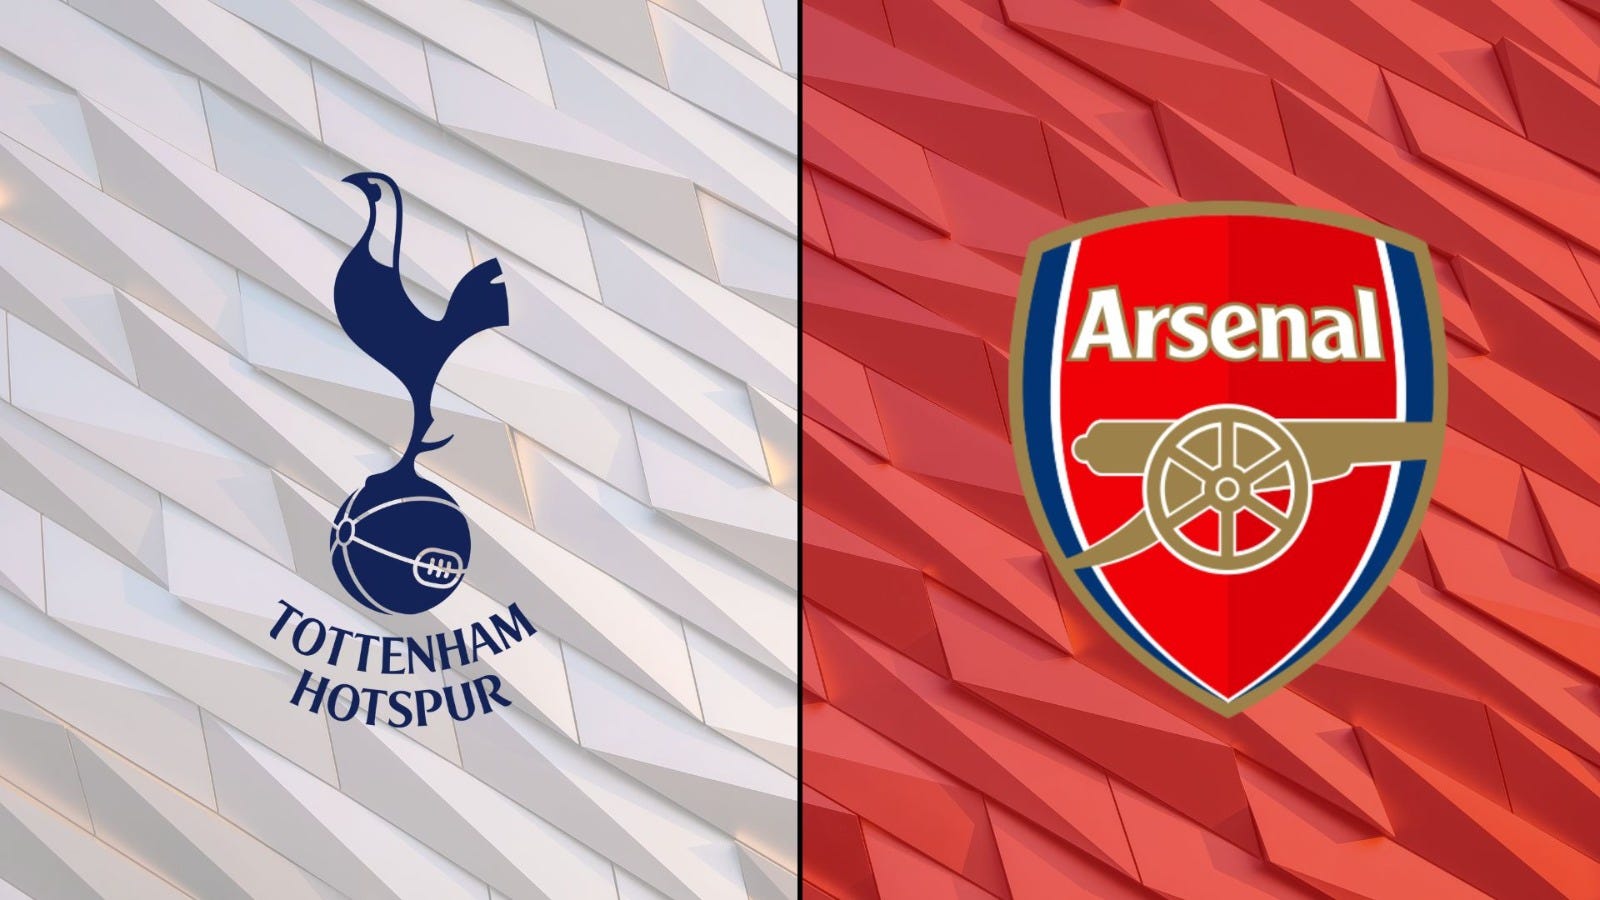 Tottenham vs Arsenal Live stream, TV channel, kick-off time and where to watch Goal English Saudi Arabia